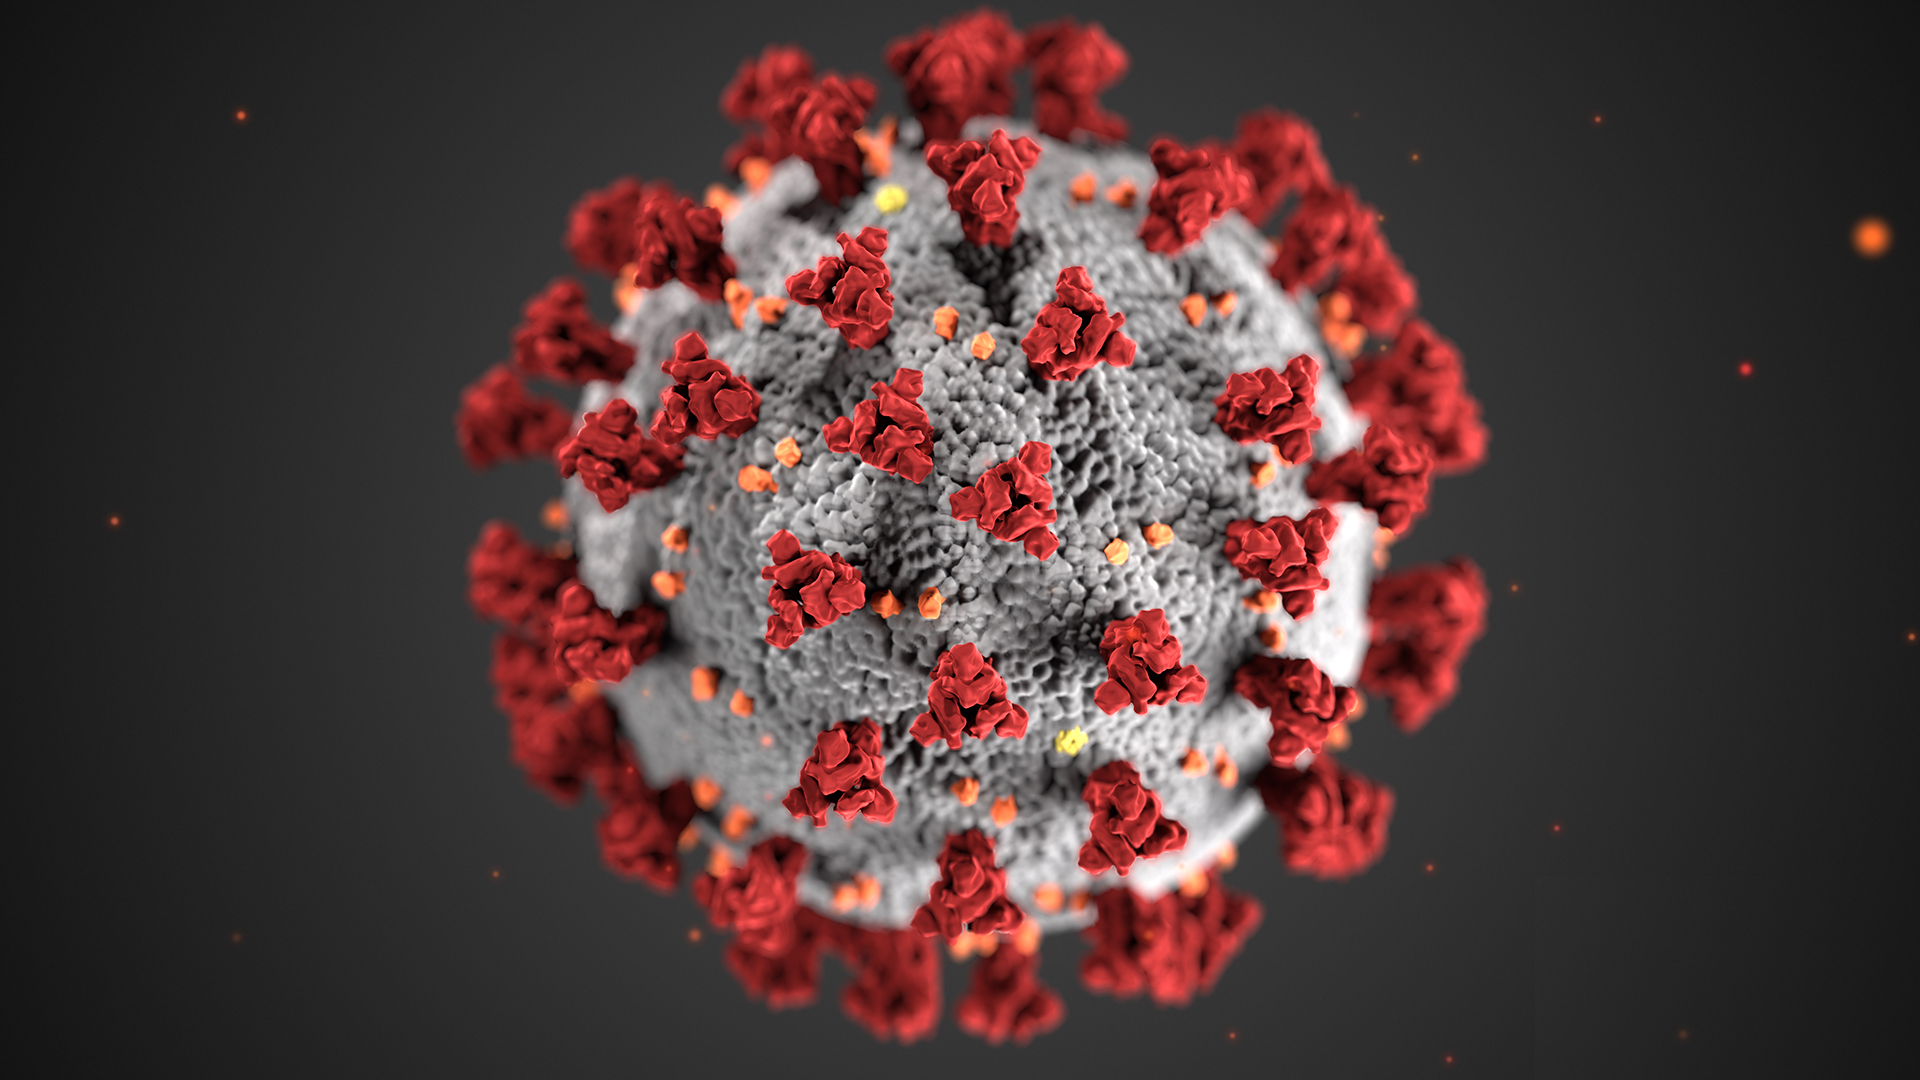 Coronavirus Cell image via https://livescience.com